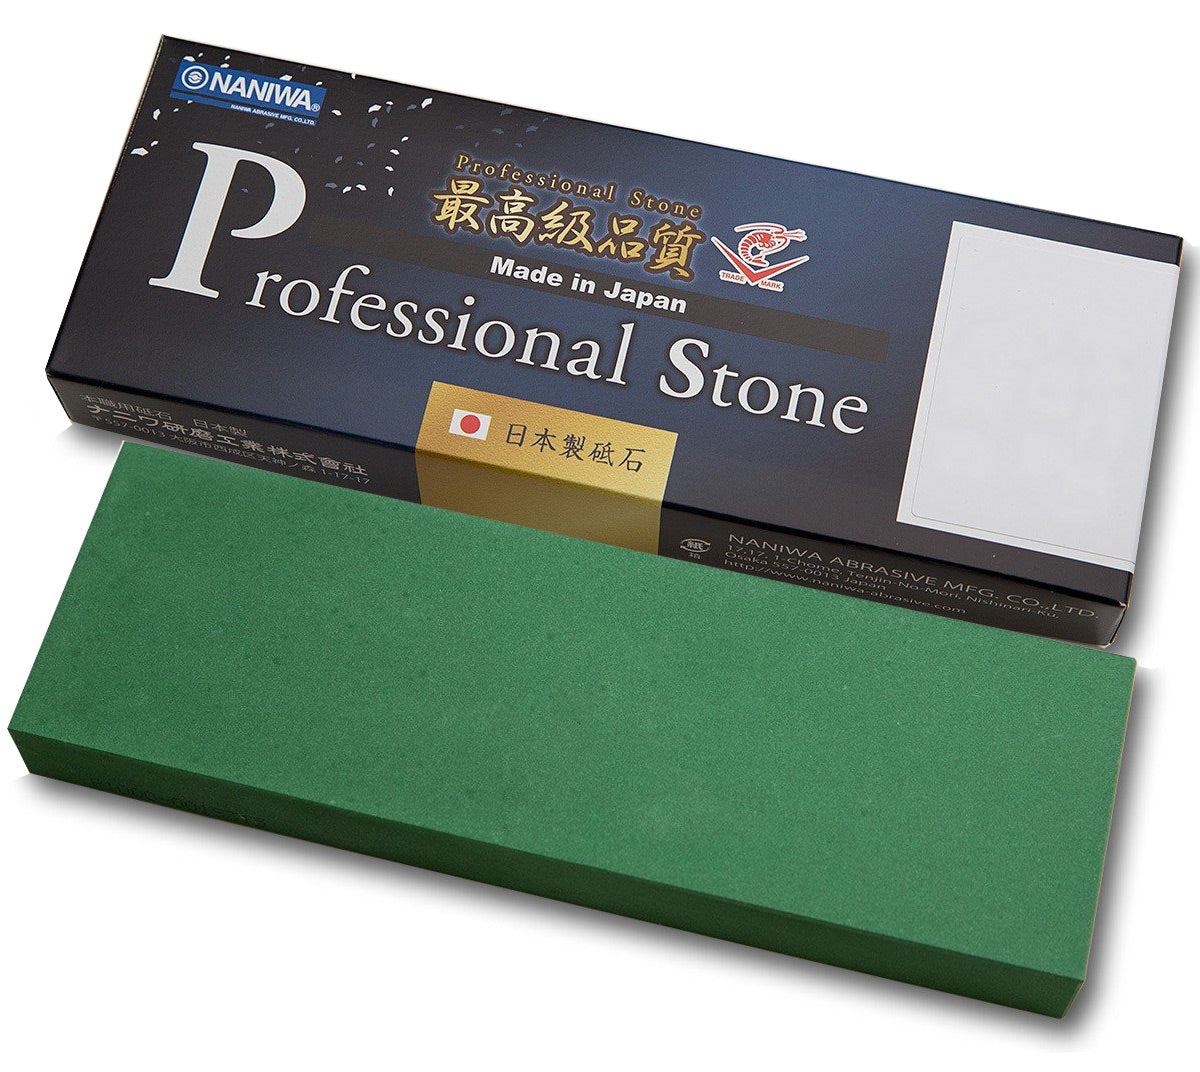 Japanese King Super Fine Finishing Stone 3000 Grit Whetstone #F-1 Made in  Japan